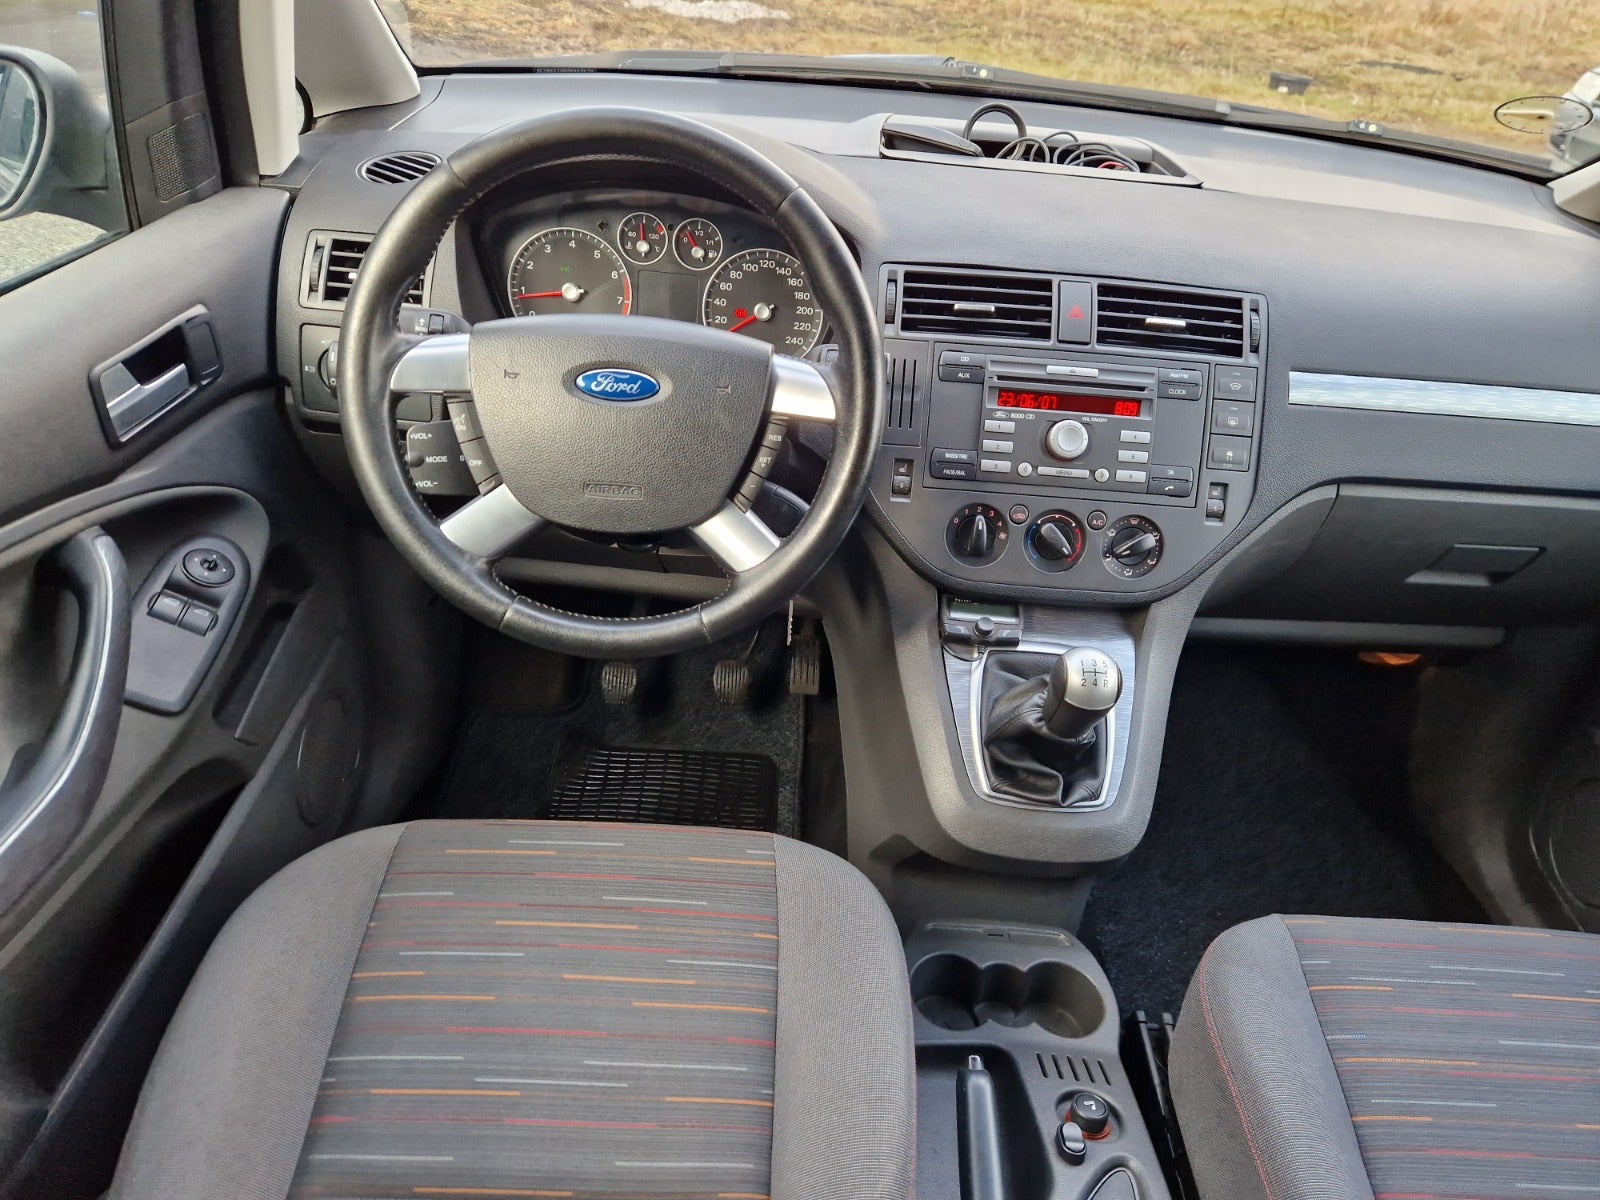 Ford C-MAX 1,6 Ambiente Benzin modelår 2007 km 323000 træk